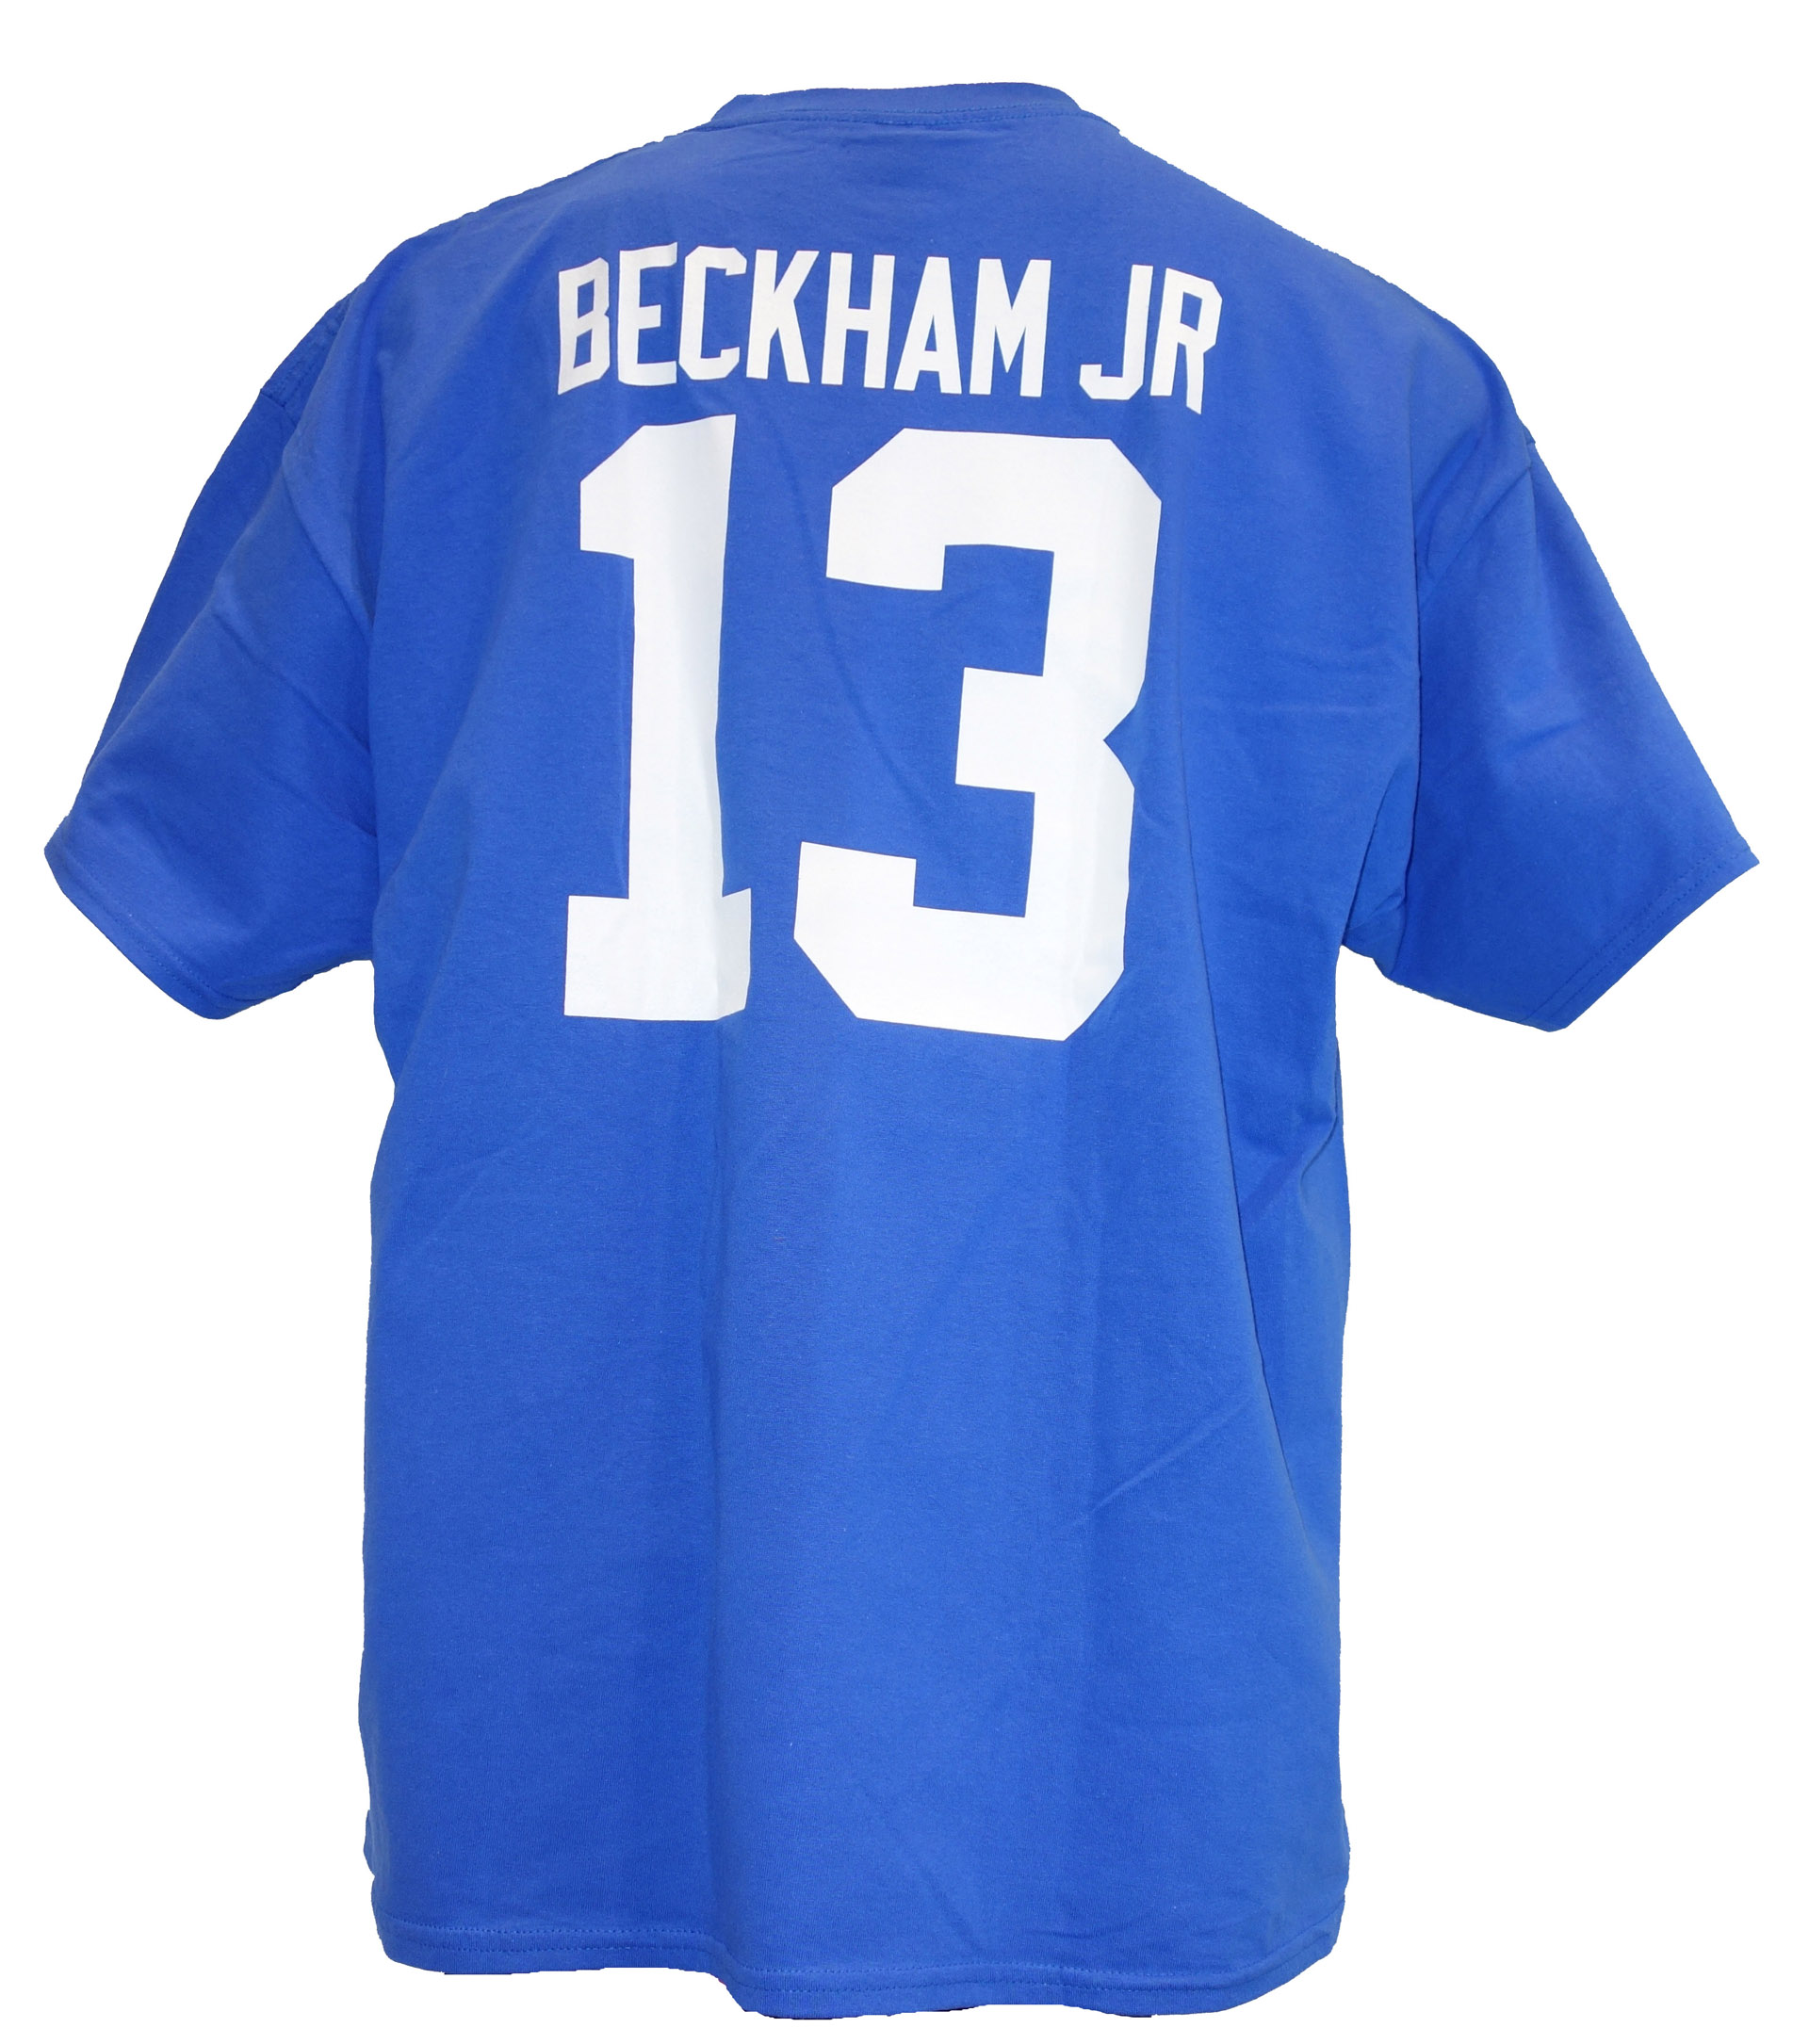 NFL Players T-Shirt New York Giants Beckham JR Nr.13